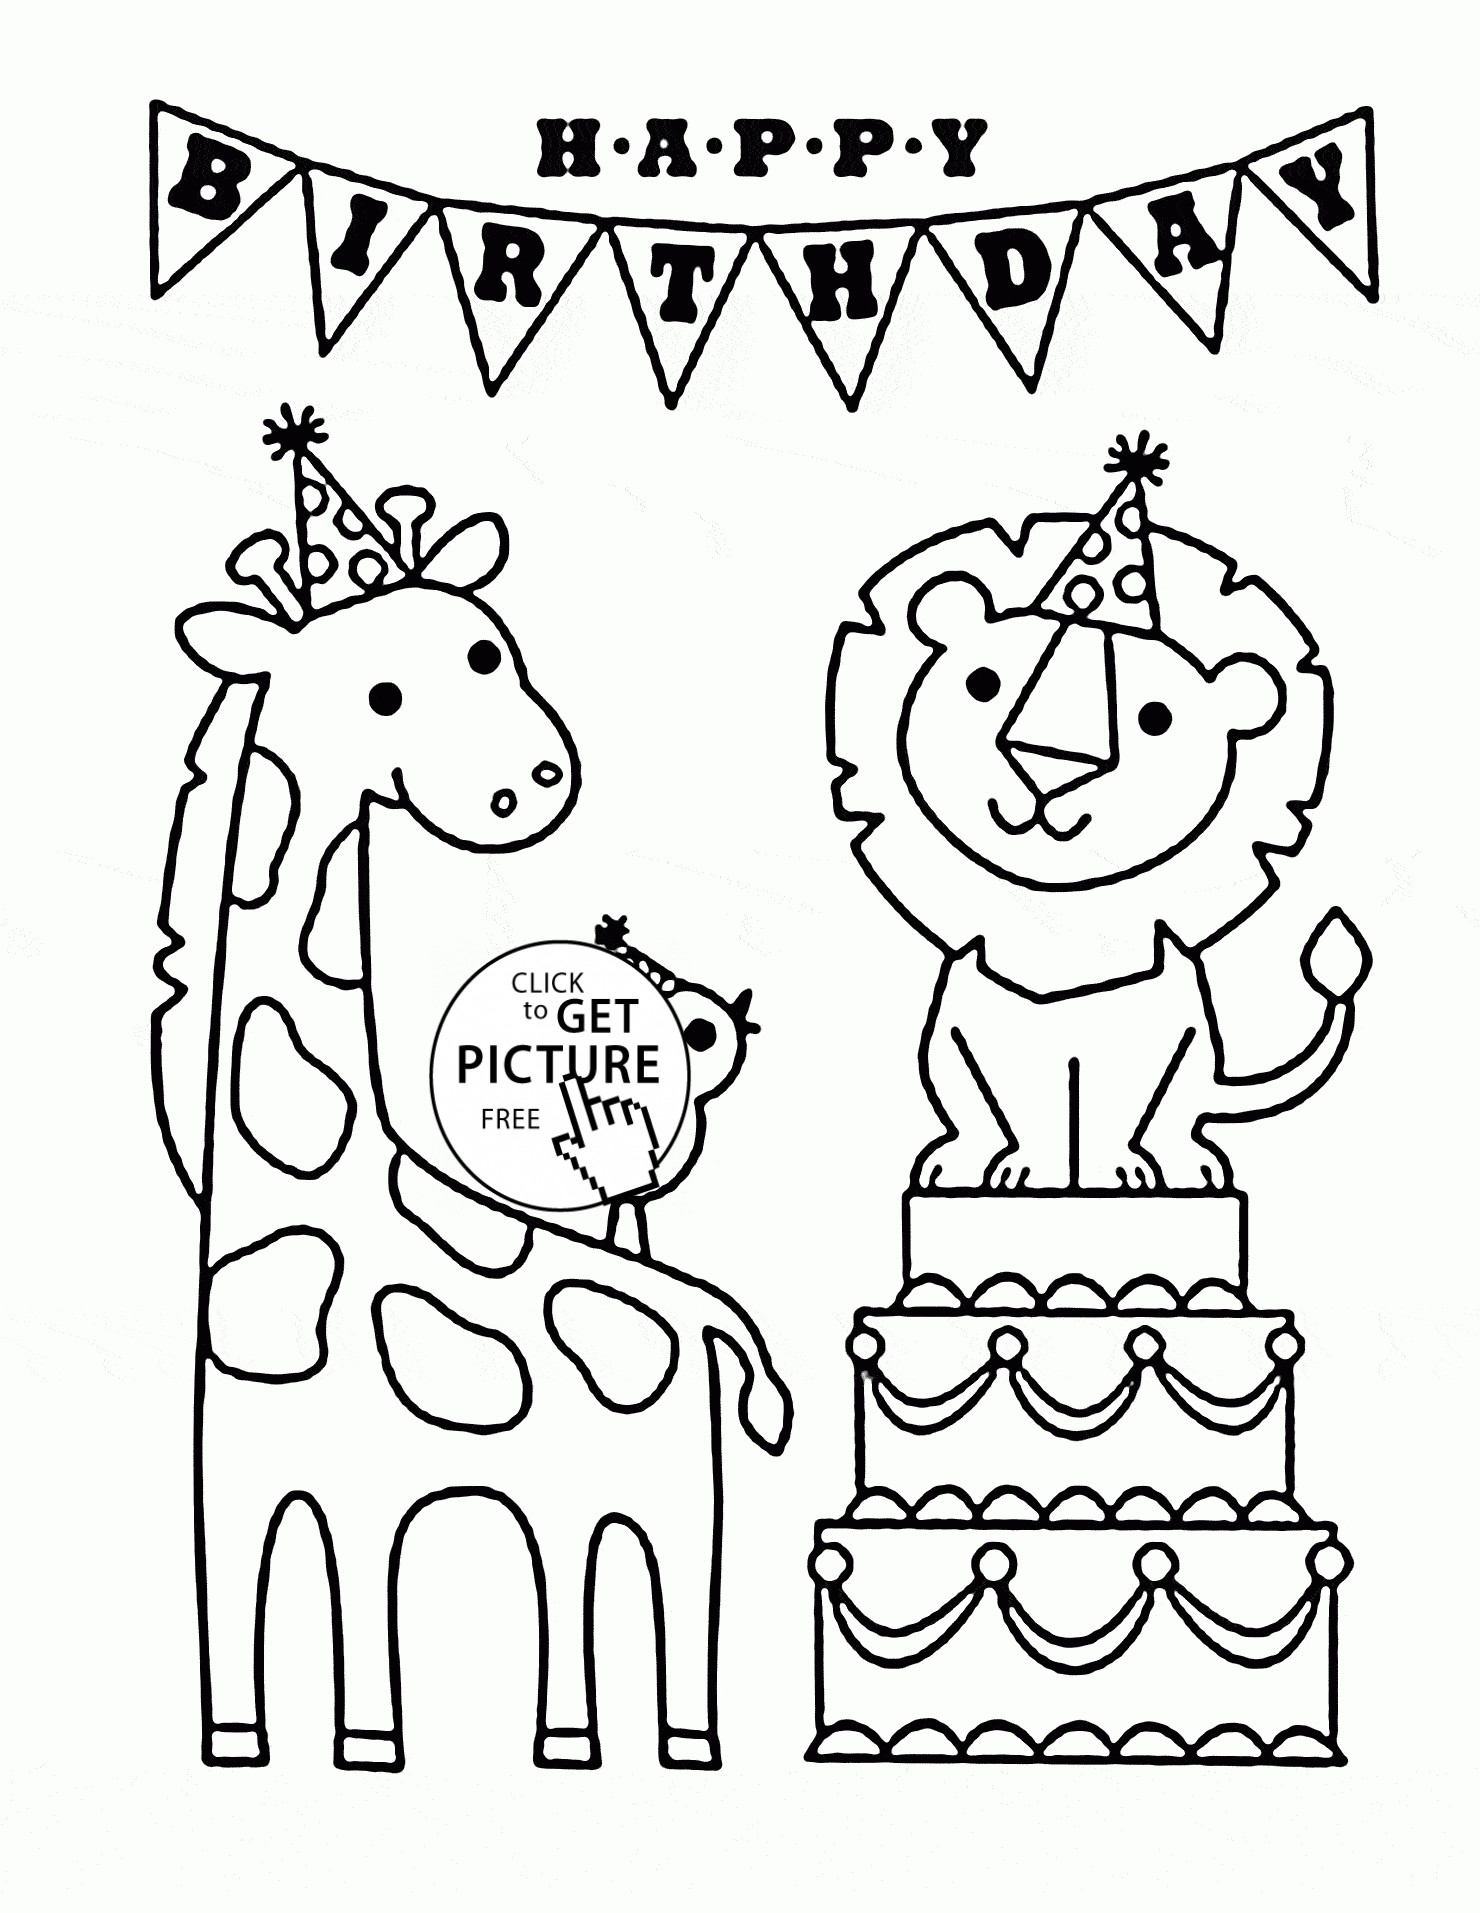 Happy Birthday Nana Coloring Pages at GetColorings.com | Free printable